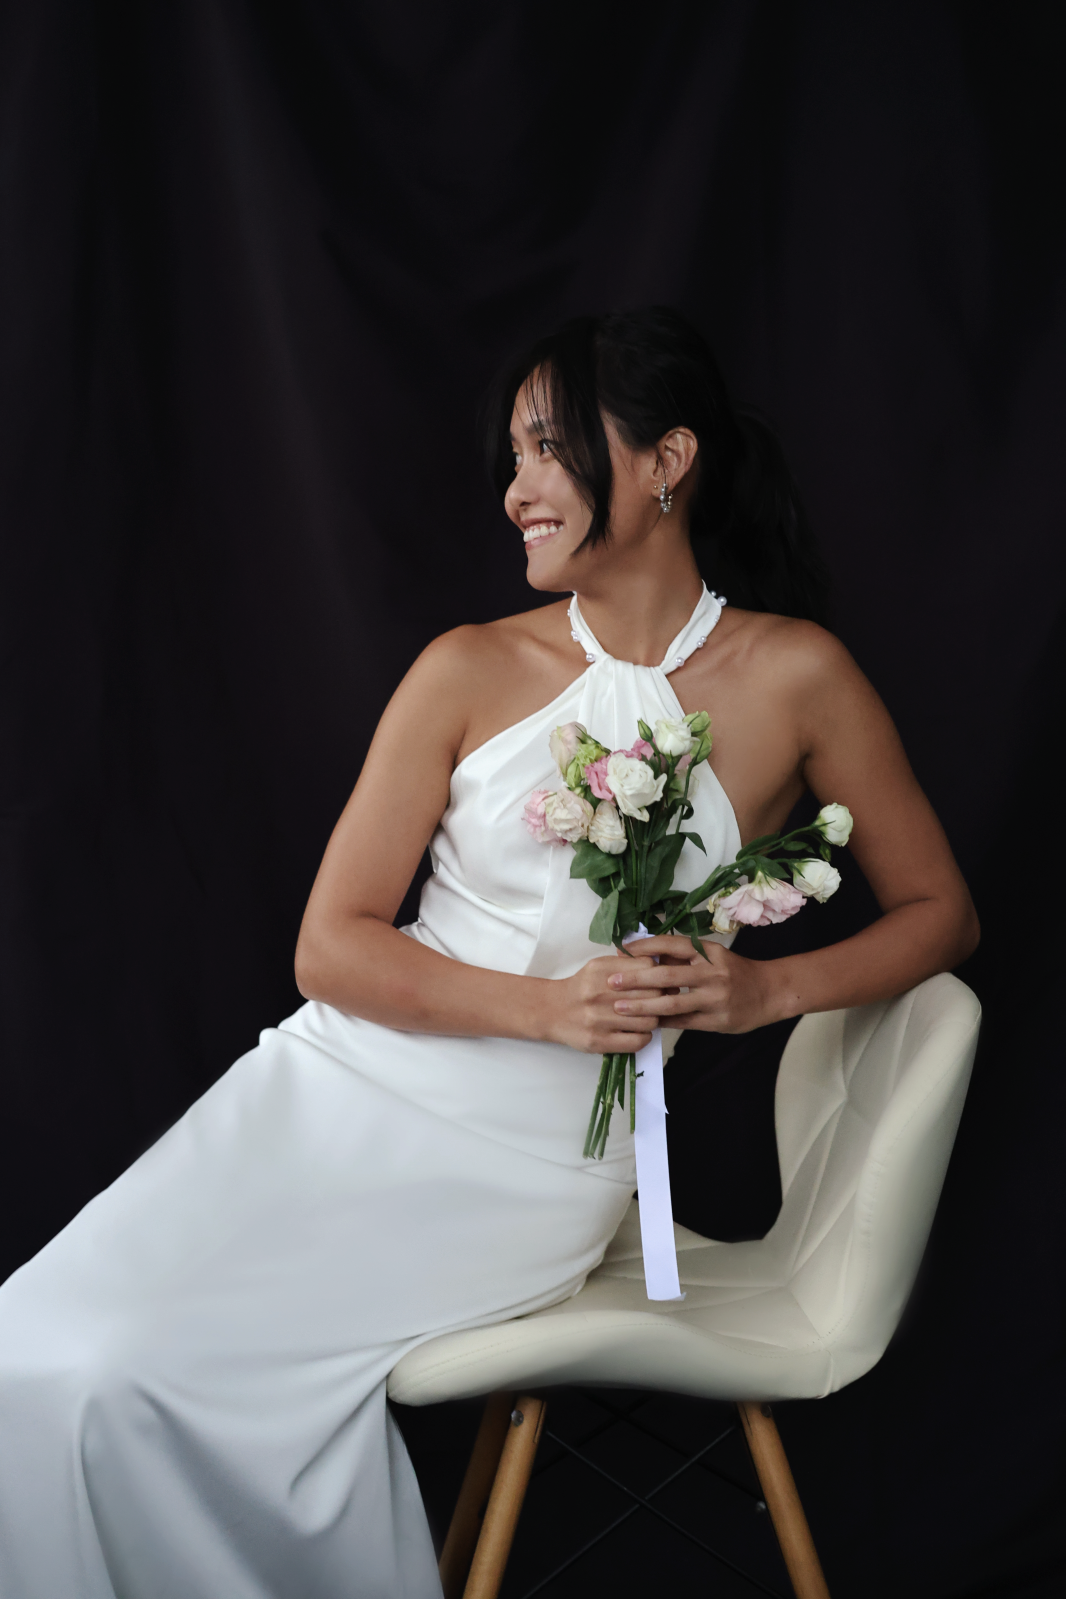 Melody minimal halter gown | Bone and Grey Bridal